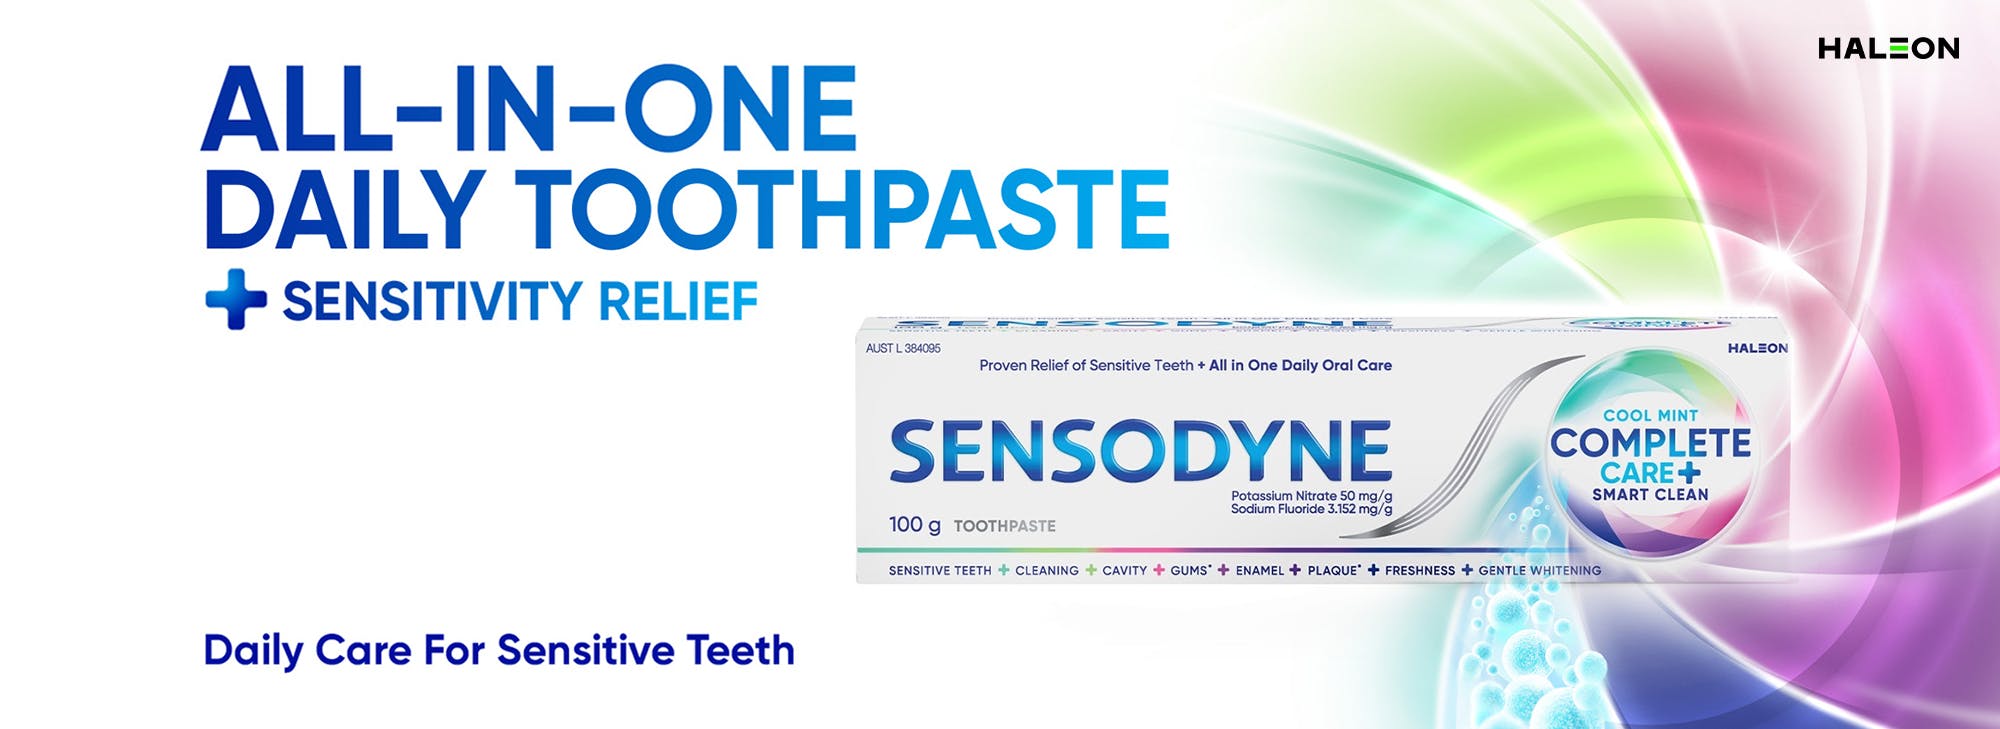 Sensodyne Cool Mint Complete care+ Smart Clean